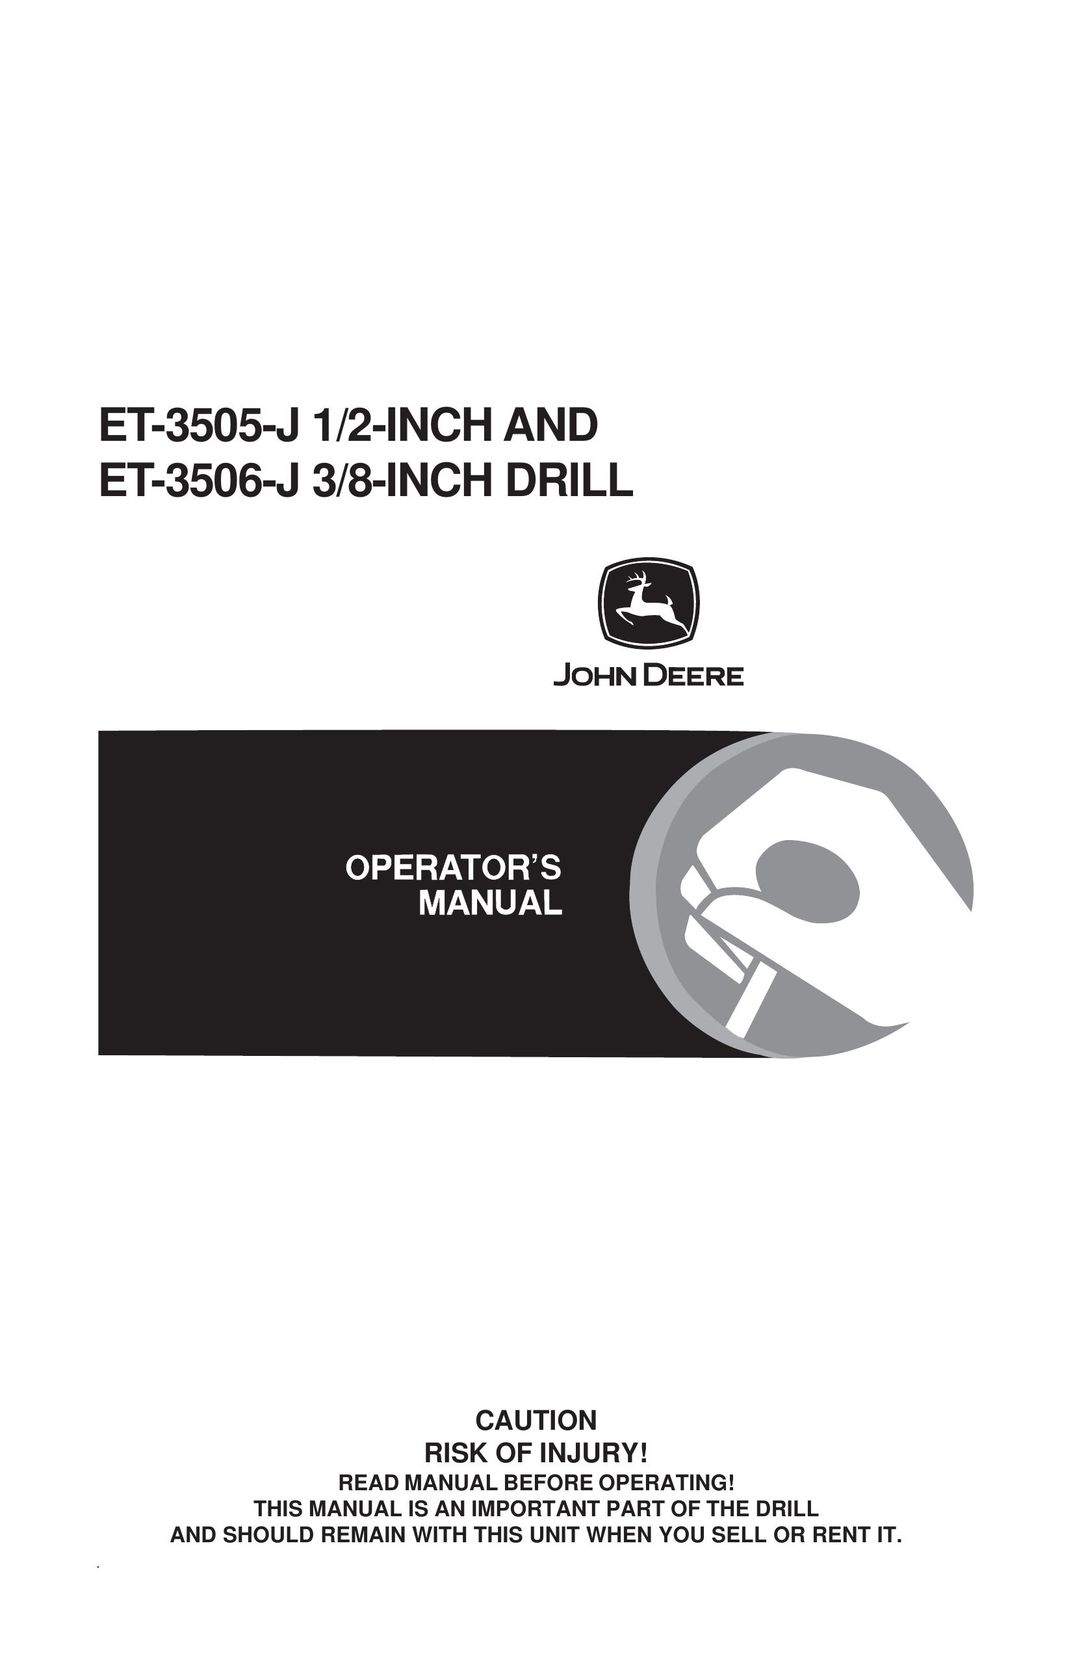 John Deere ET-3506-J Drill User Manual